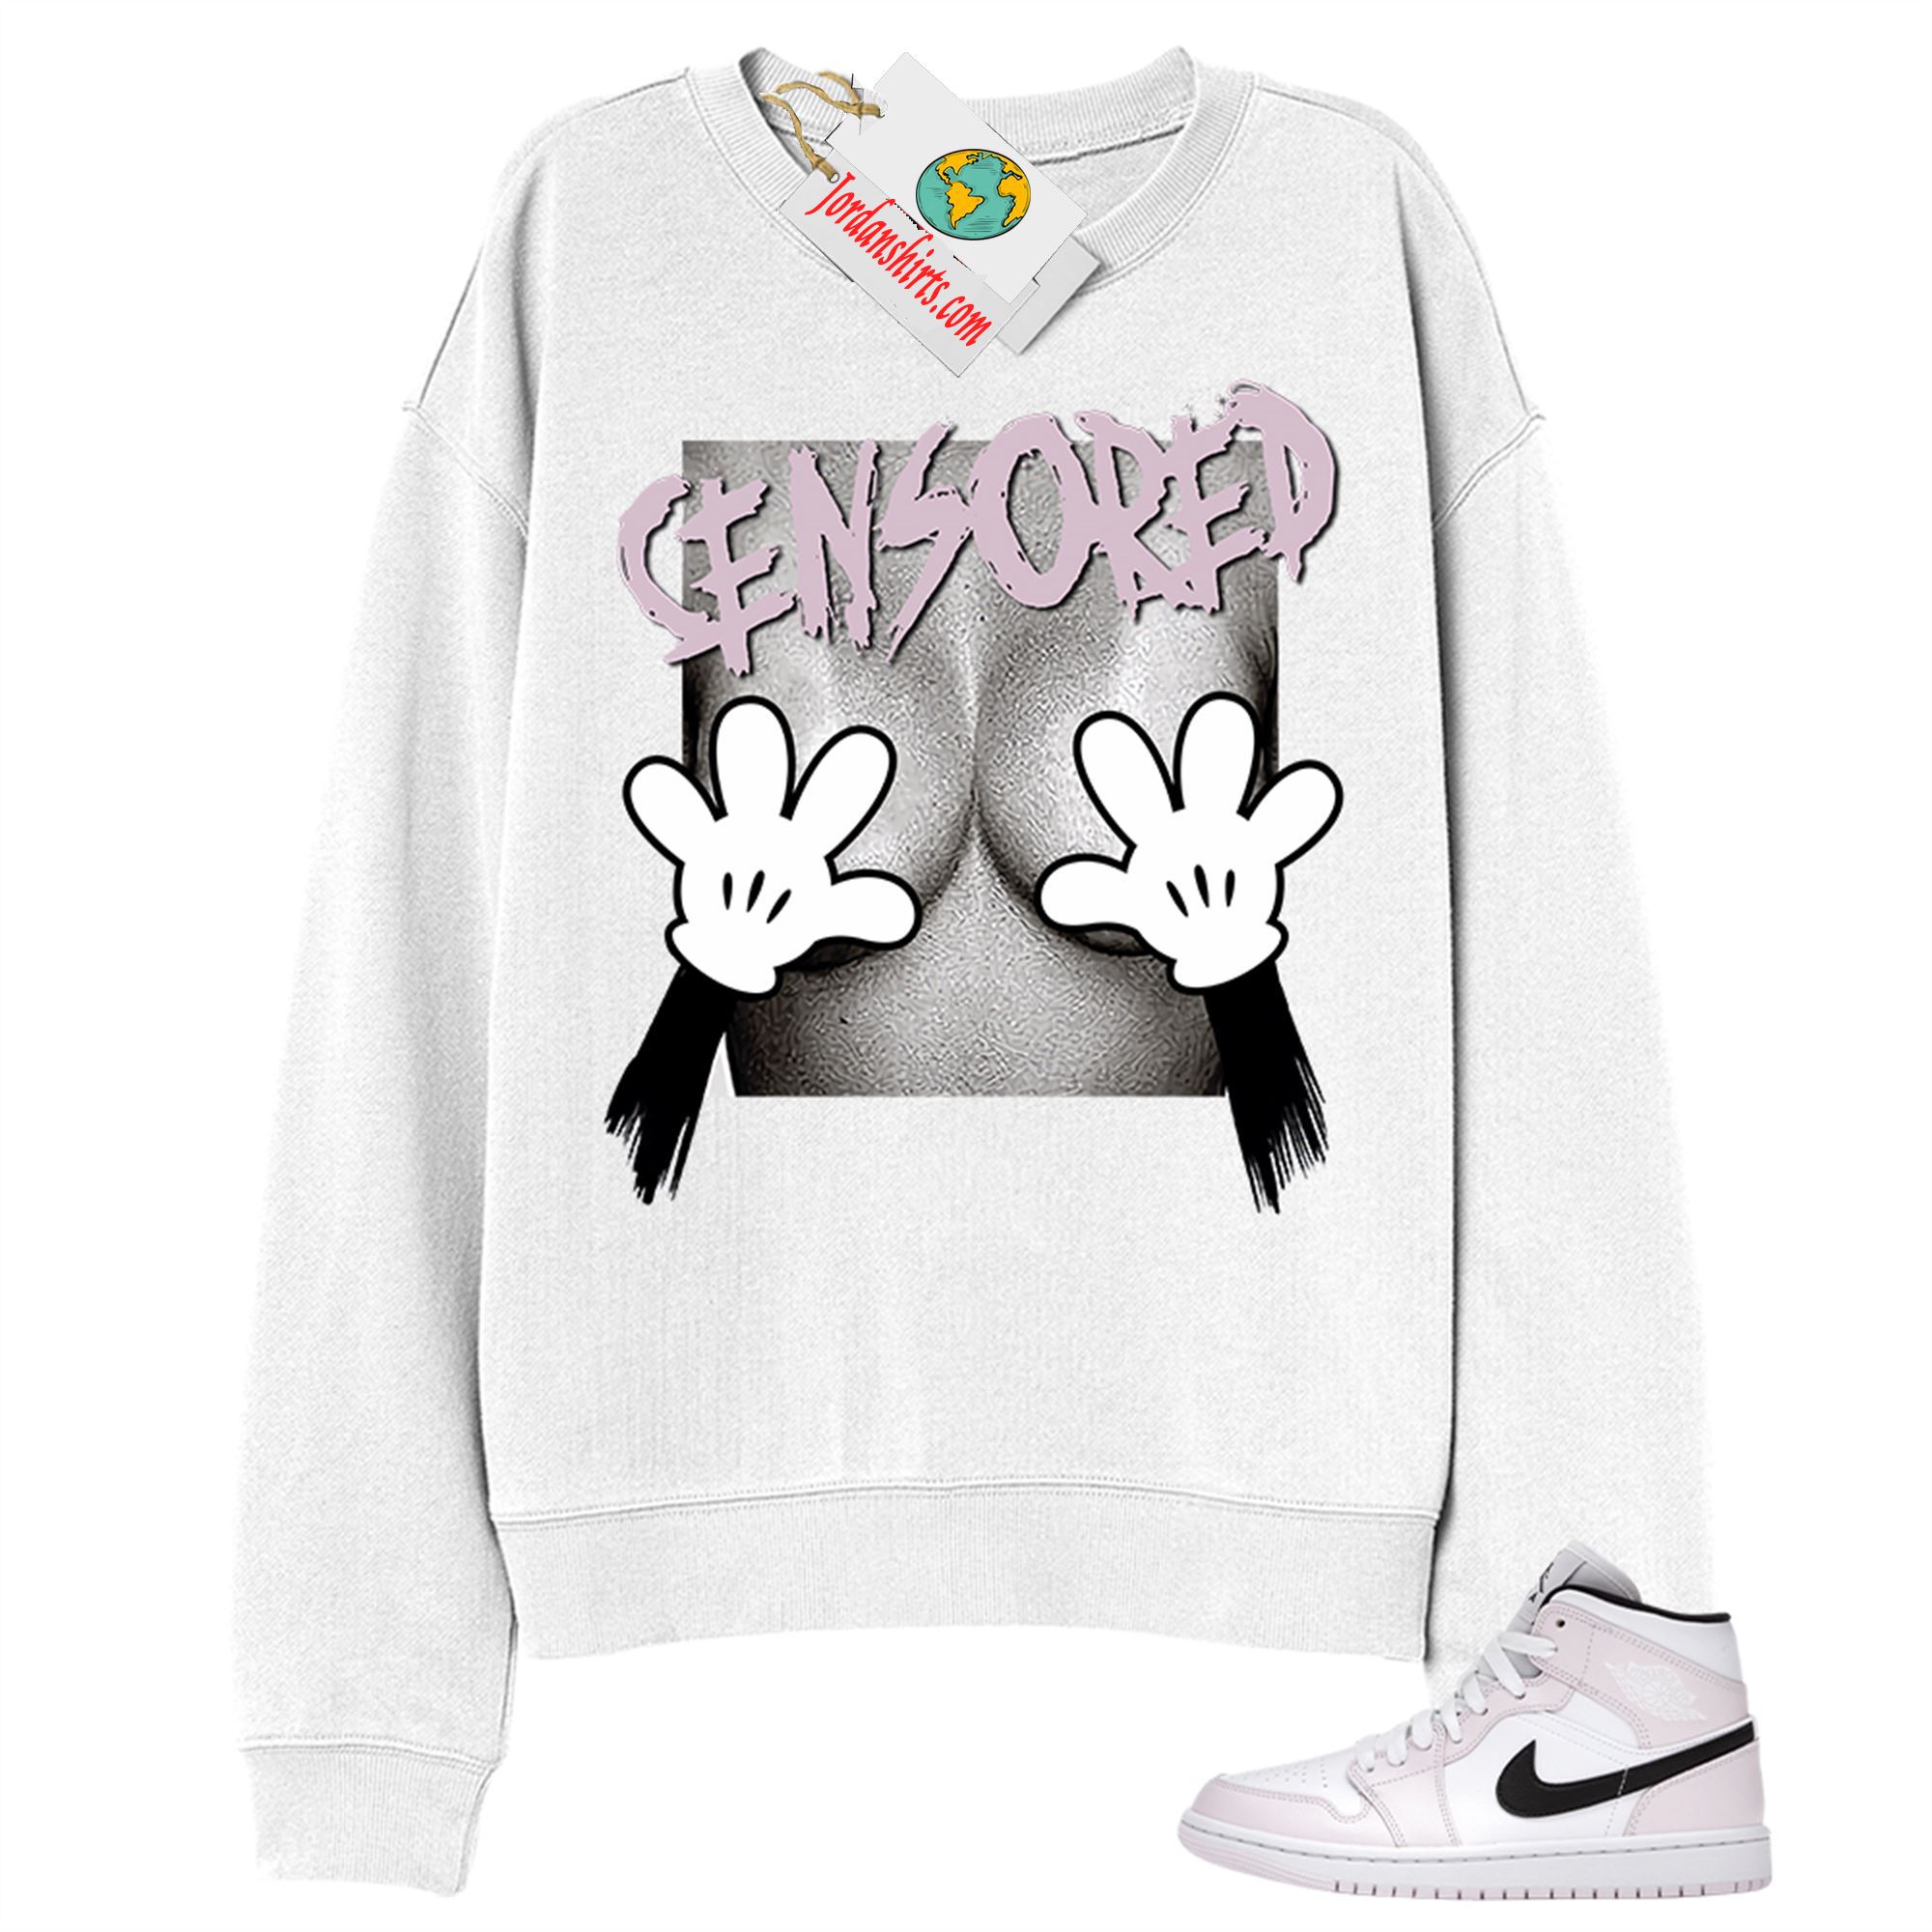 Jordan 1 Sweatshirt, Mickey Boobs Censored White Sweatshirt Air Jordan 1 Barely Rose 1s Full Size Up To 5xl